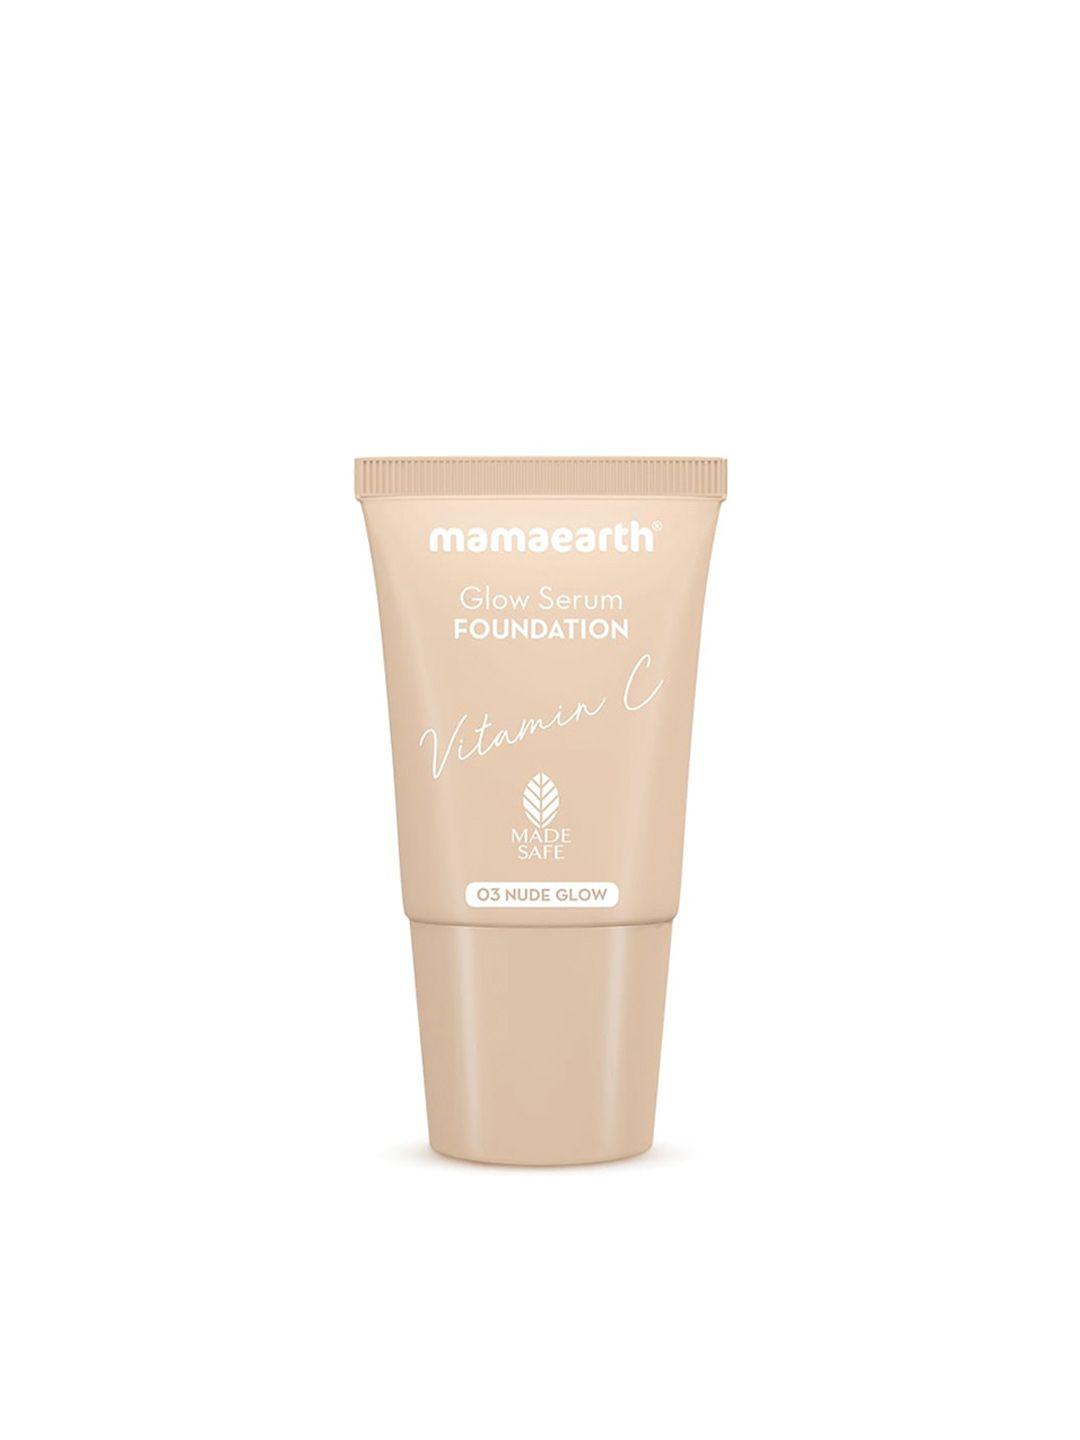 mamaearth glow serum mini foundation with vitamin c & turmeric 18ml - nude glow 03